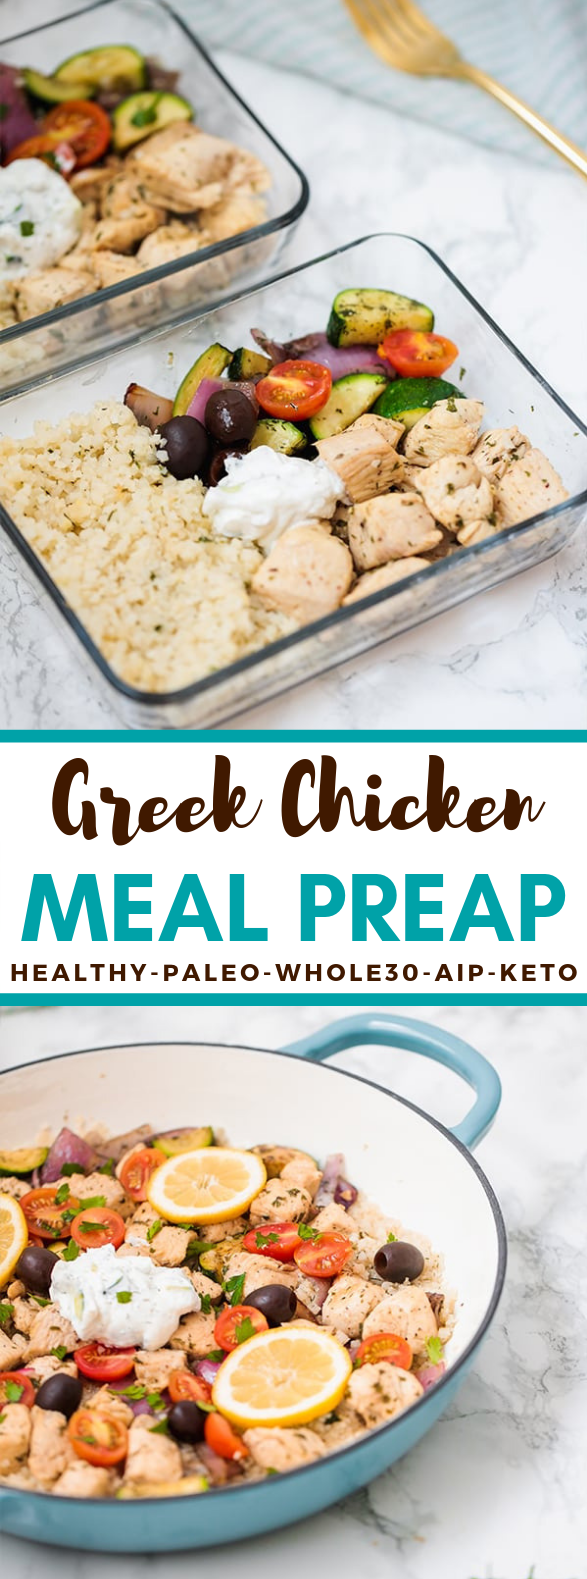 One Pan Greek Chicken Meal Prep (Paleo, Whole30, Keto, AIP) #healthy #glutenfree